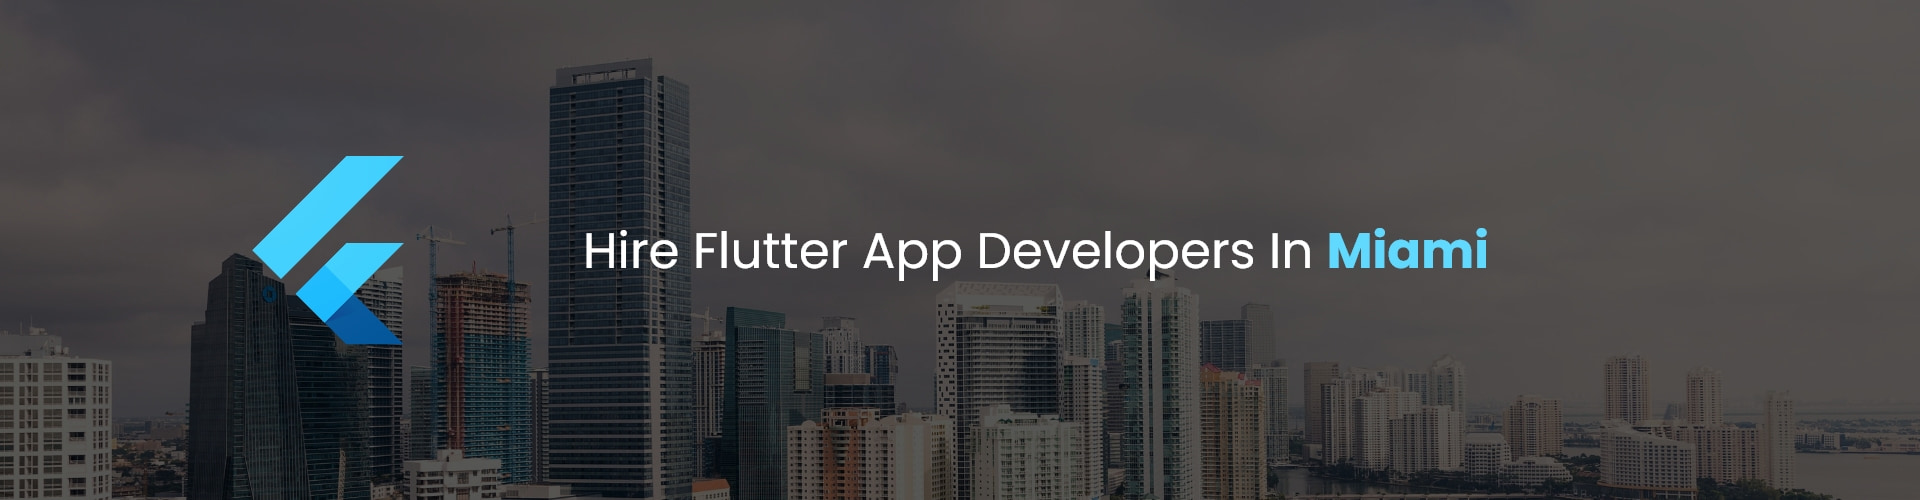 hire flutter app developers in miami 